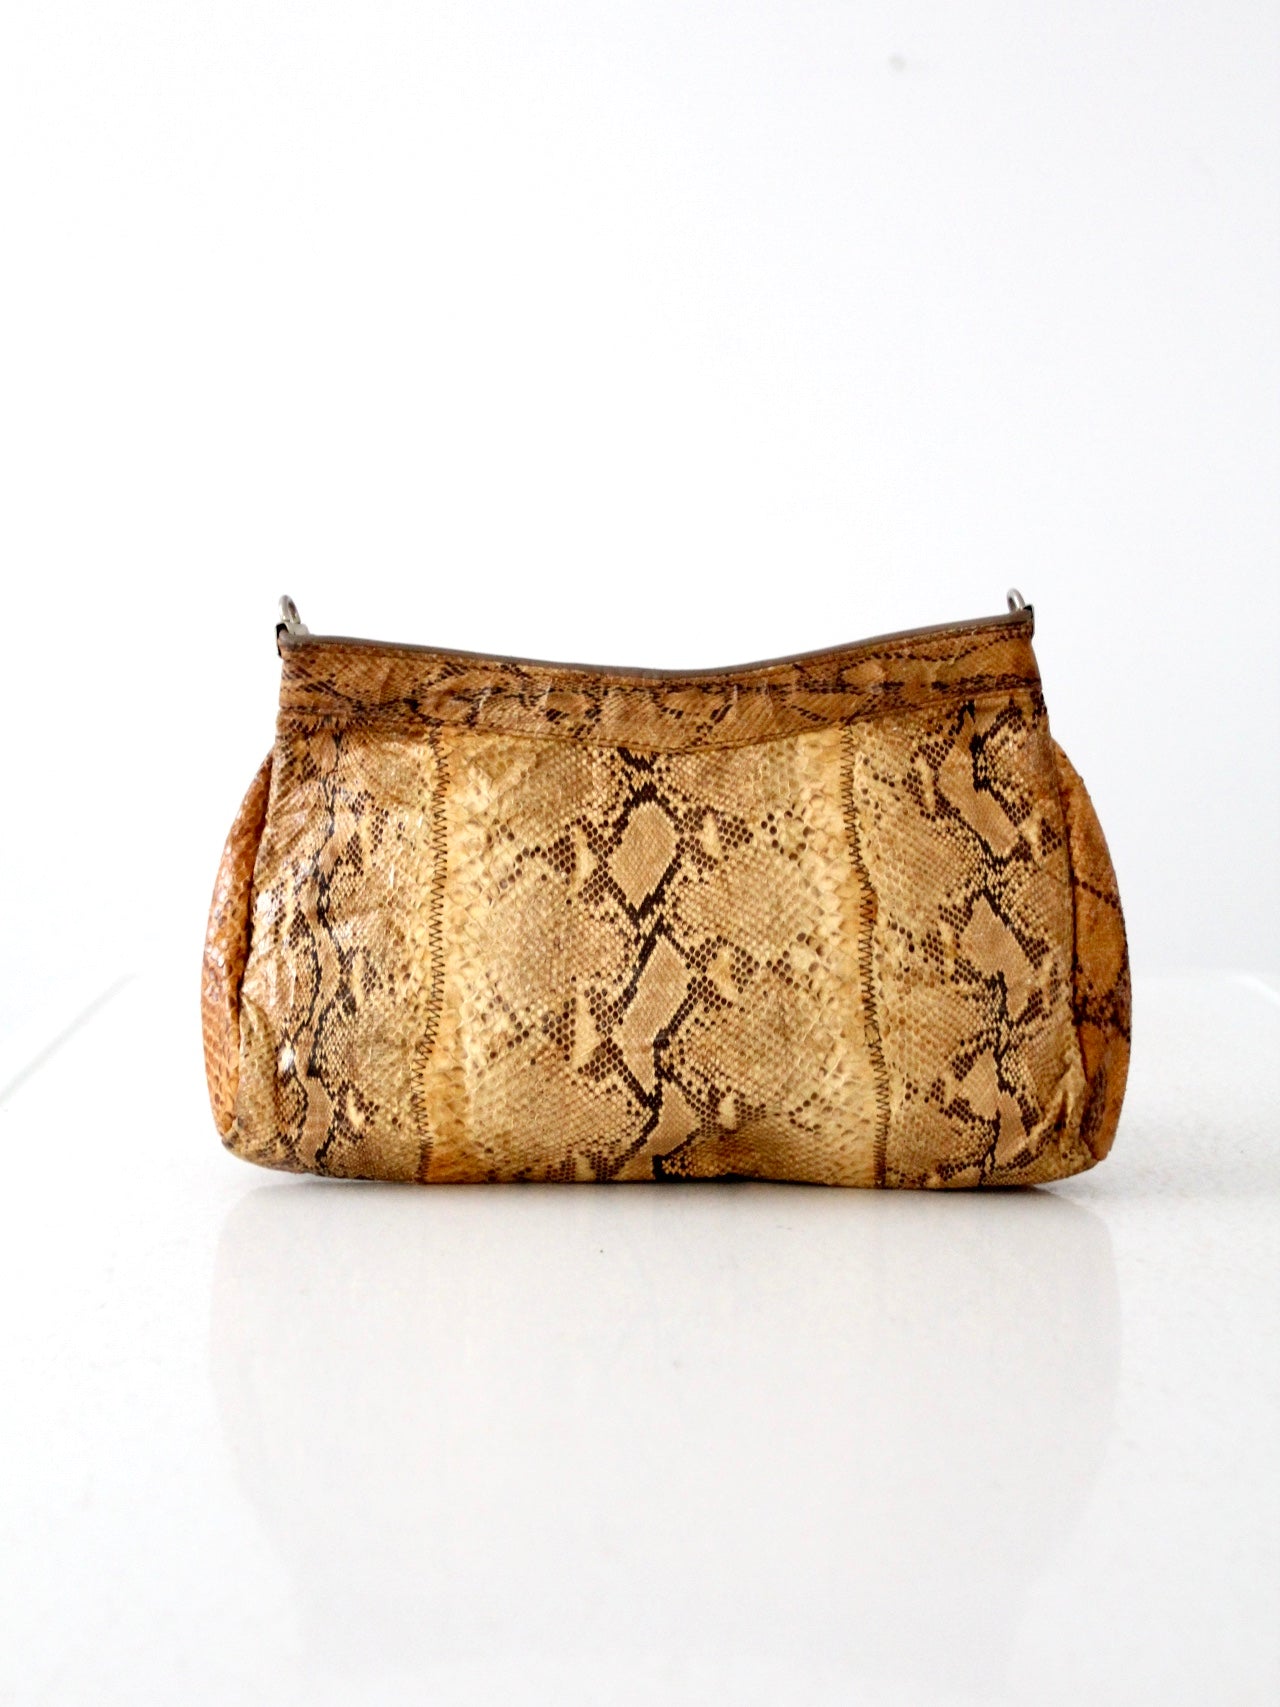 Banjara Bohemian Bag Afghani Style Coin Clutch Vintage Kutch Embroidery  Cross Body Bag Clutch Purse at Rs 625/piece | Jaipur | ID: 9519444562